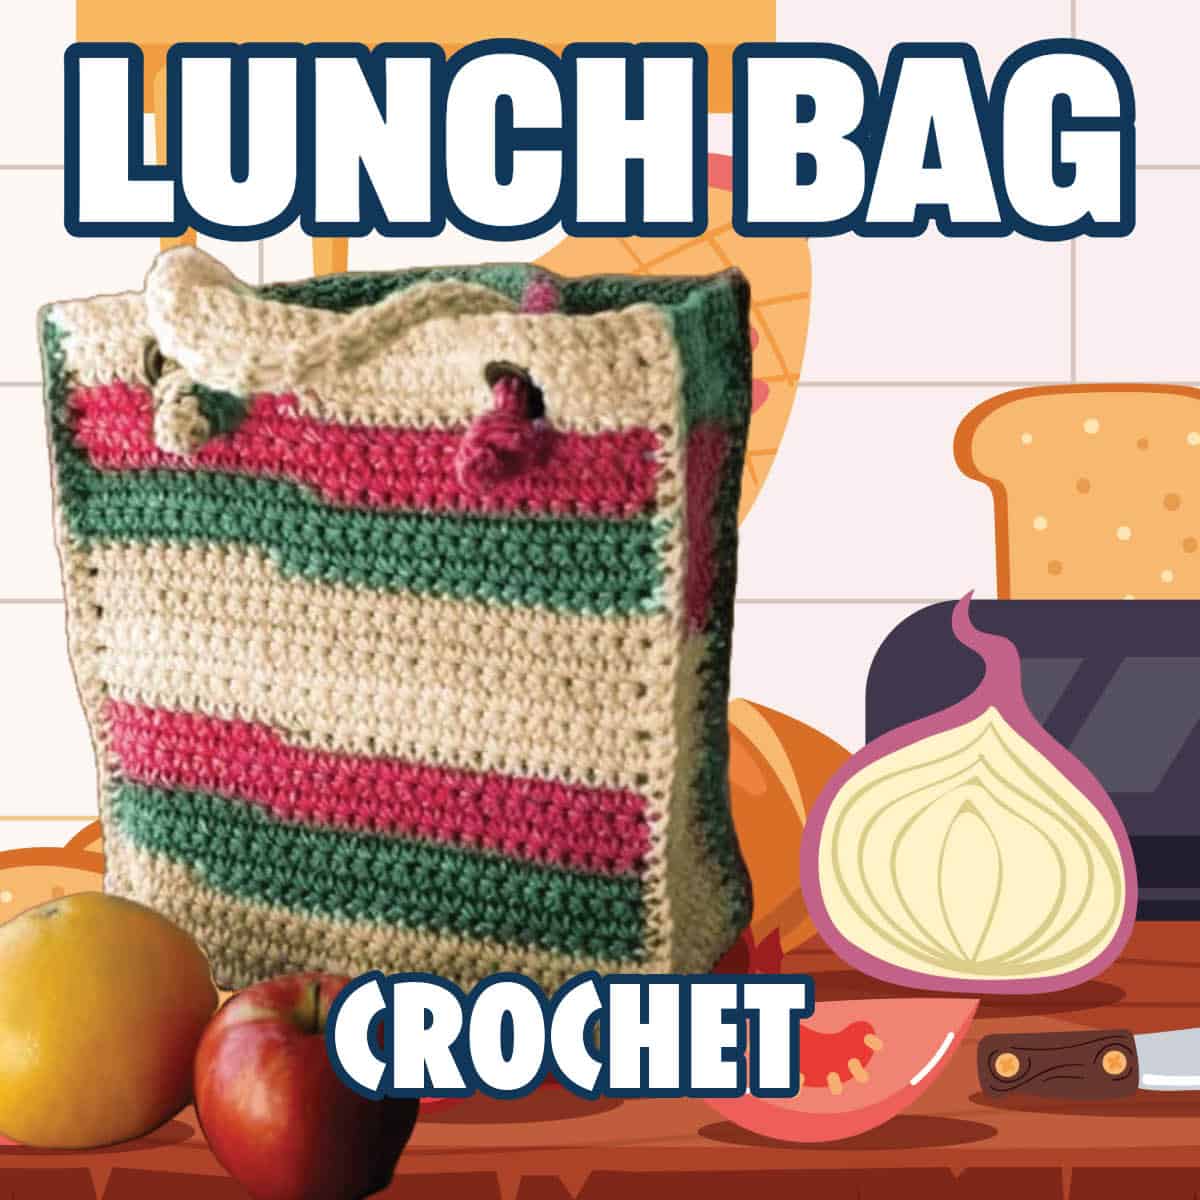 Free Pattern to Make Crochet Lunch Bag